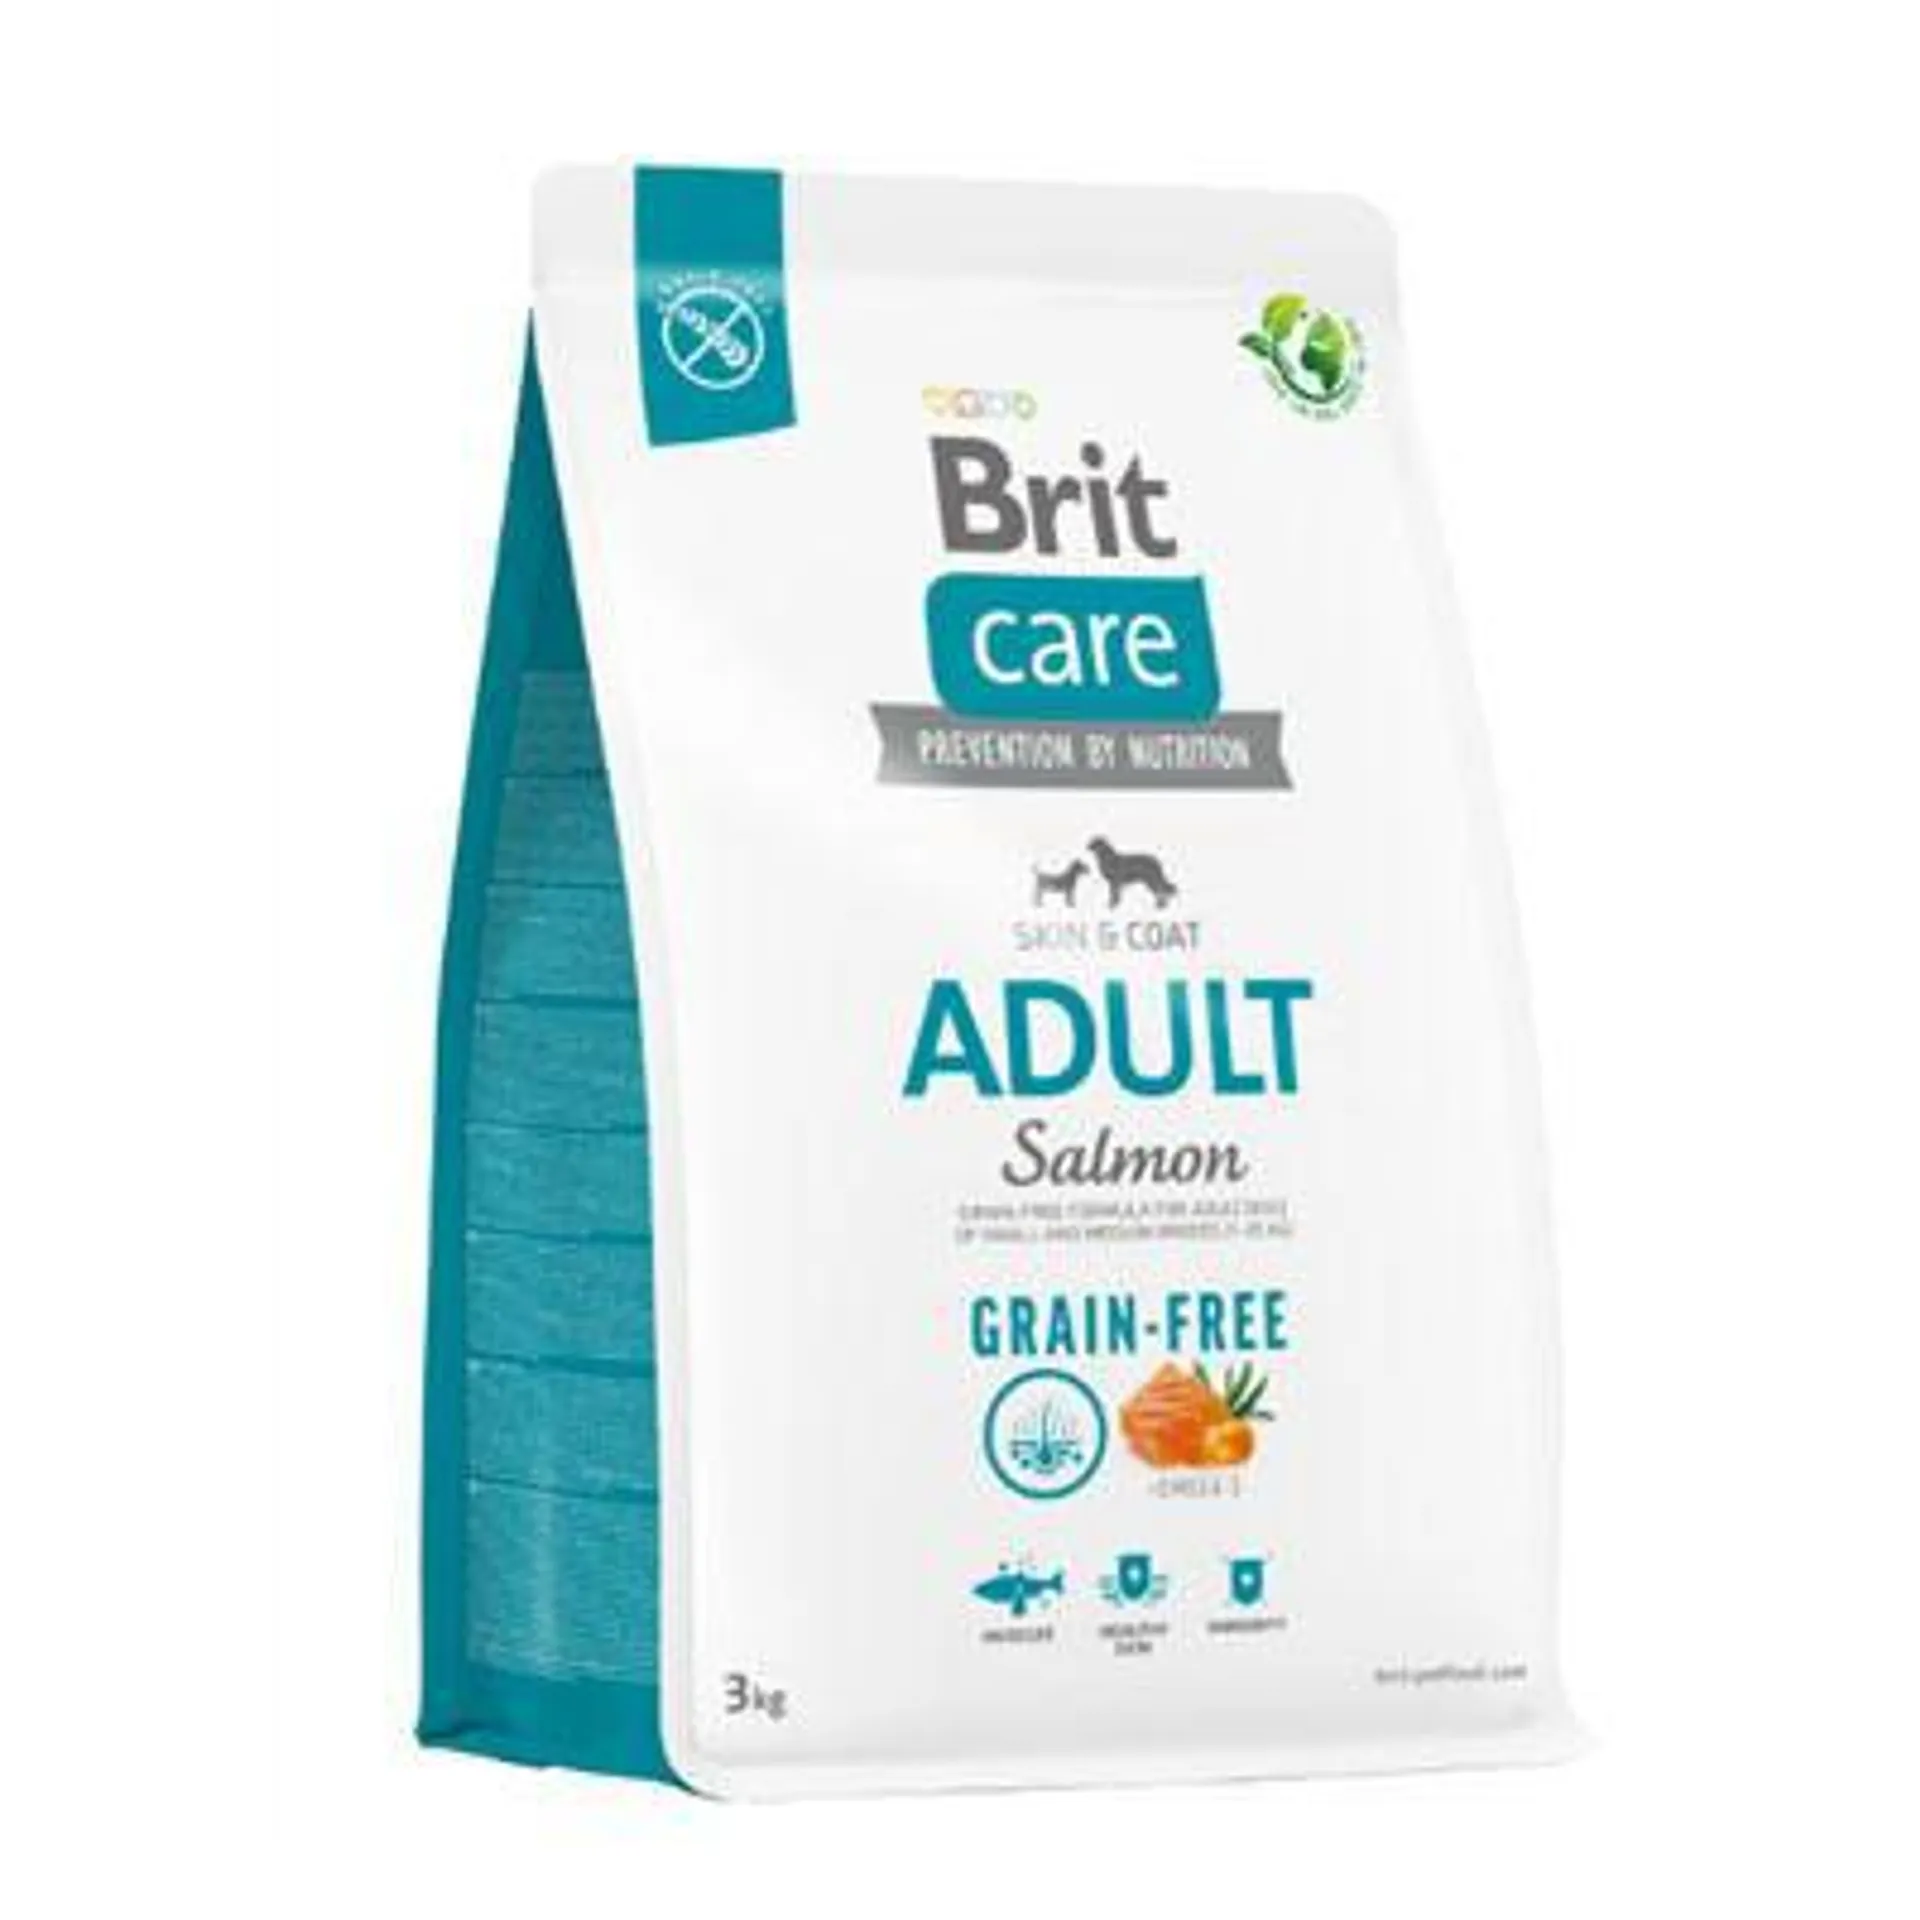 Brit Care Grain-free Adult Salmon